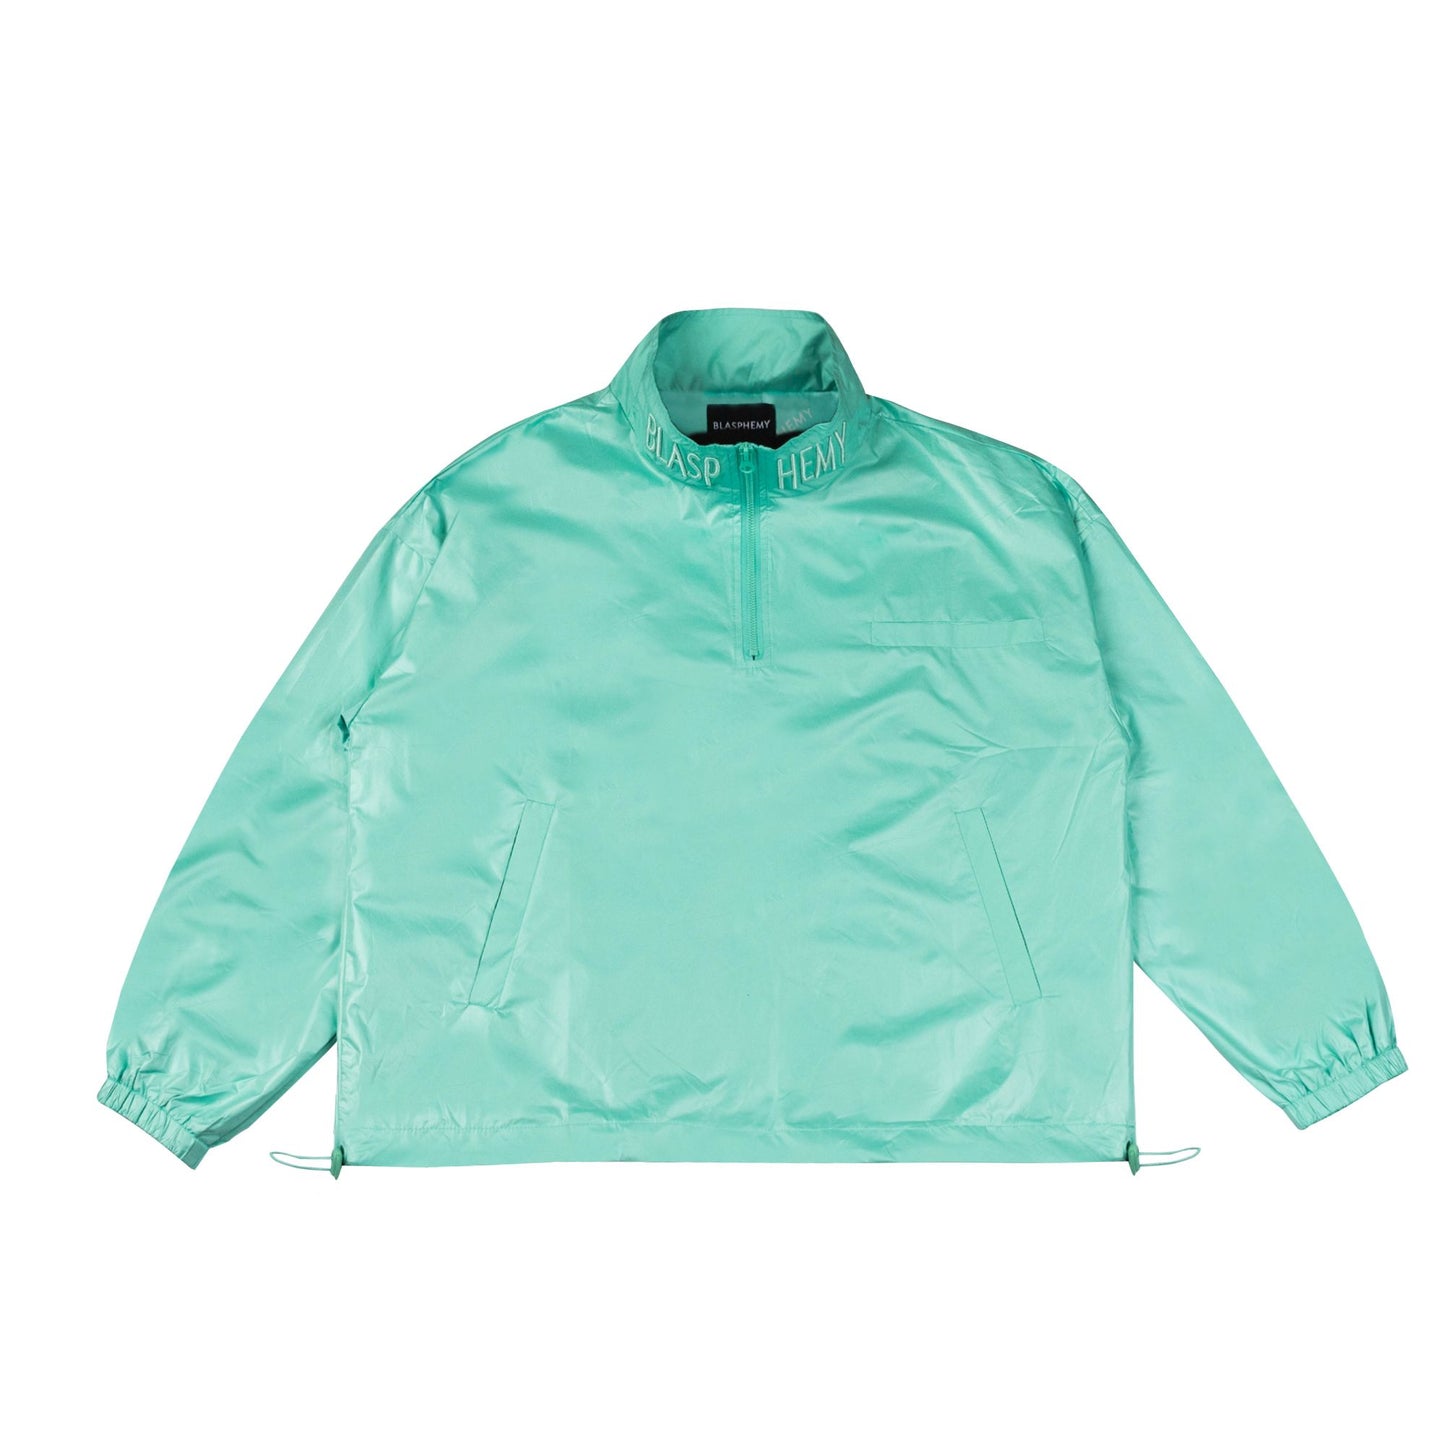 Turquoise Windbreaker Jacket